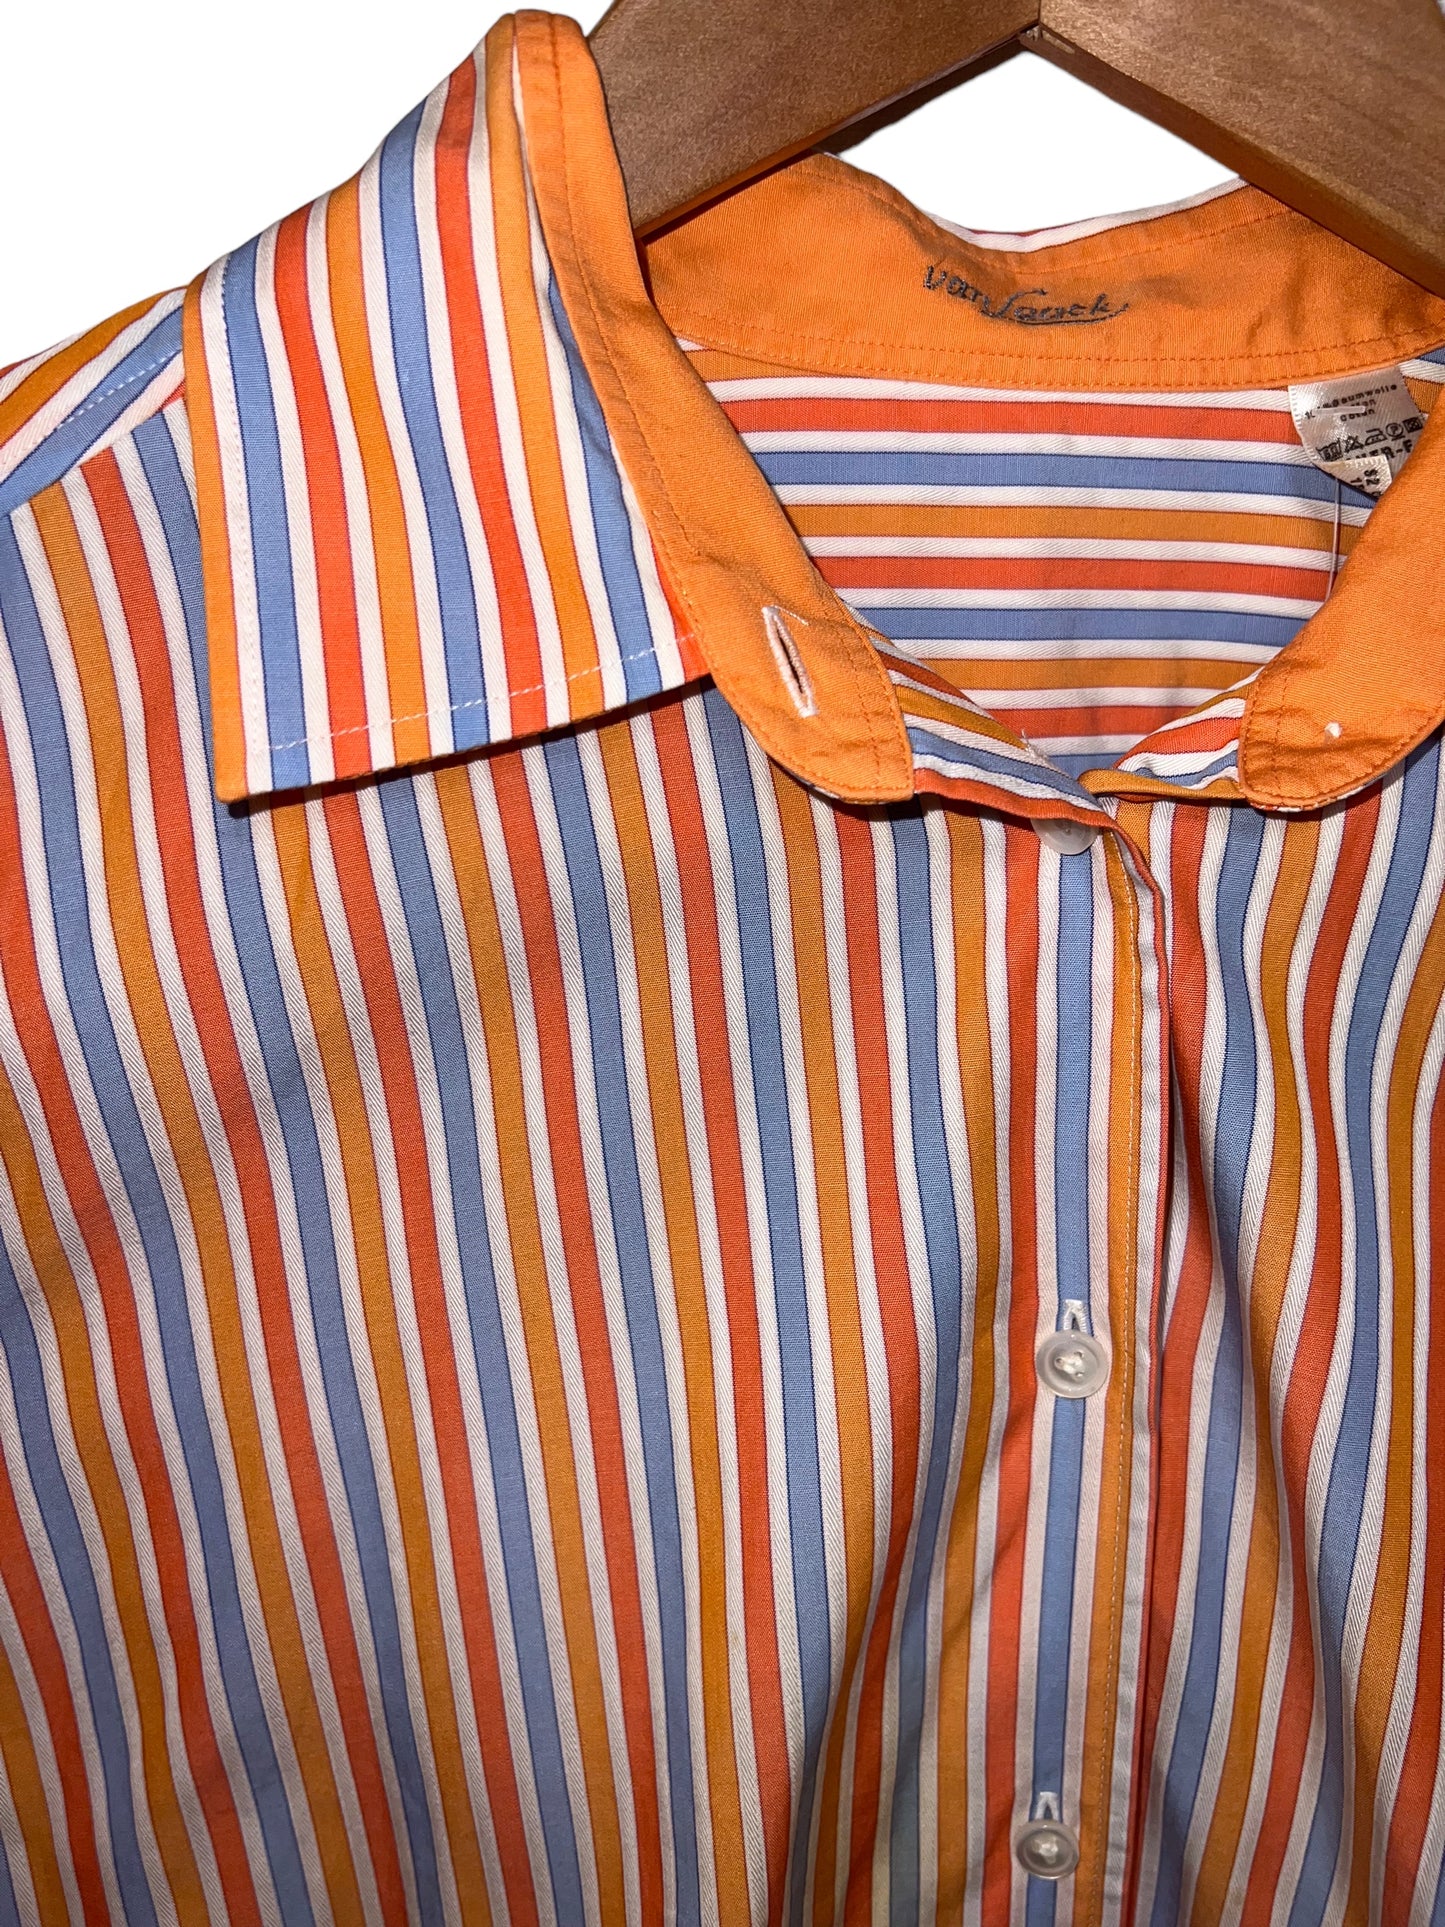 Women’s Orange, White Blue Shirt (Size XL)